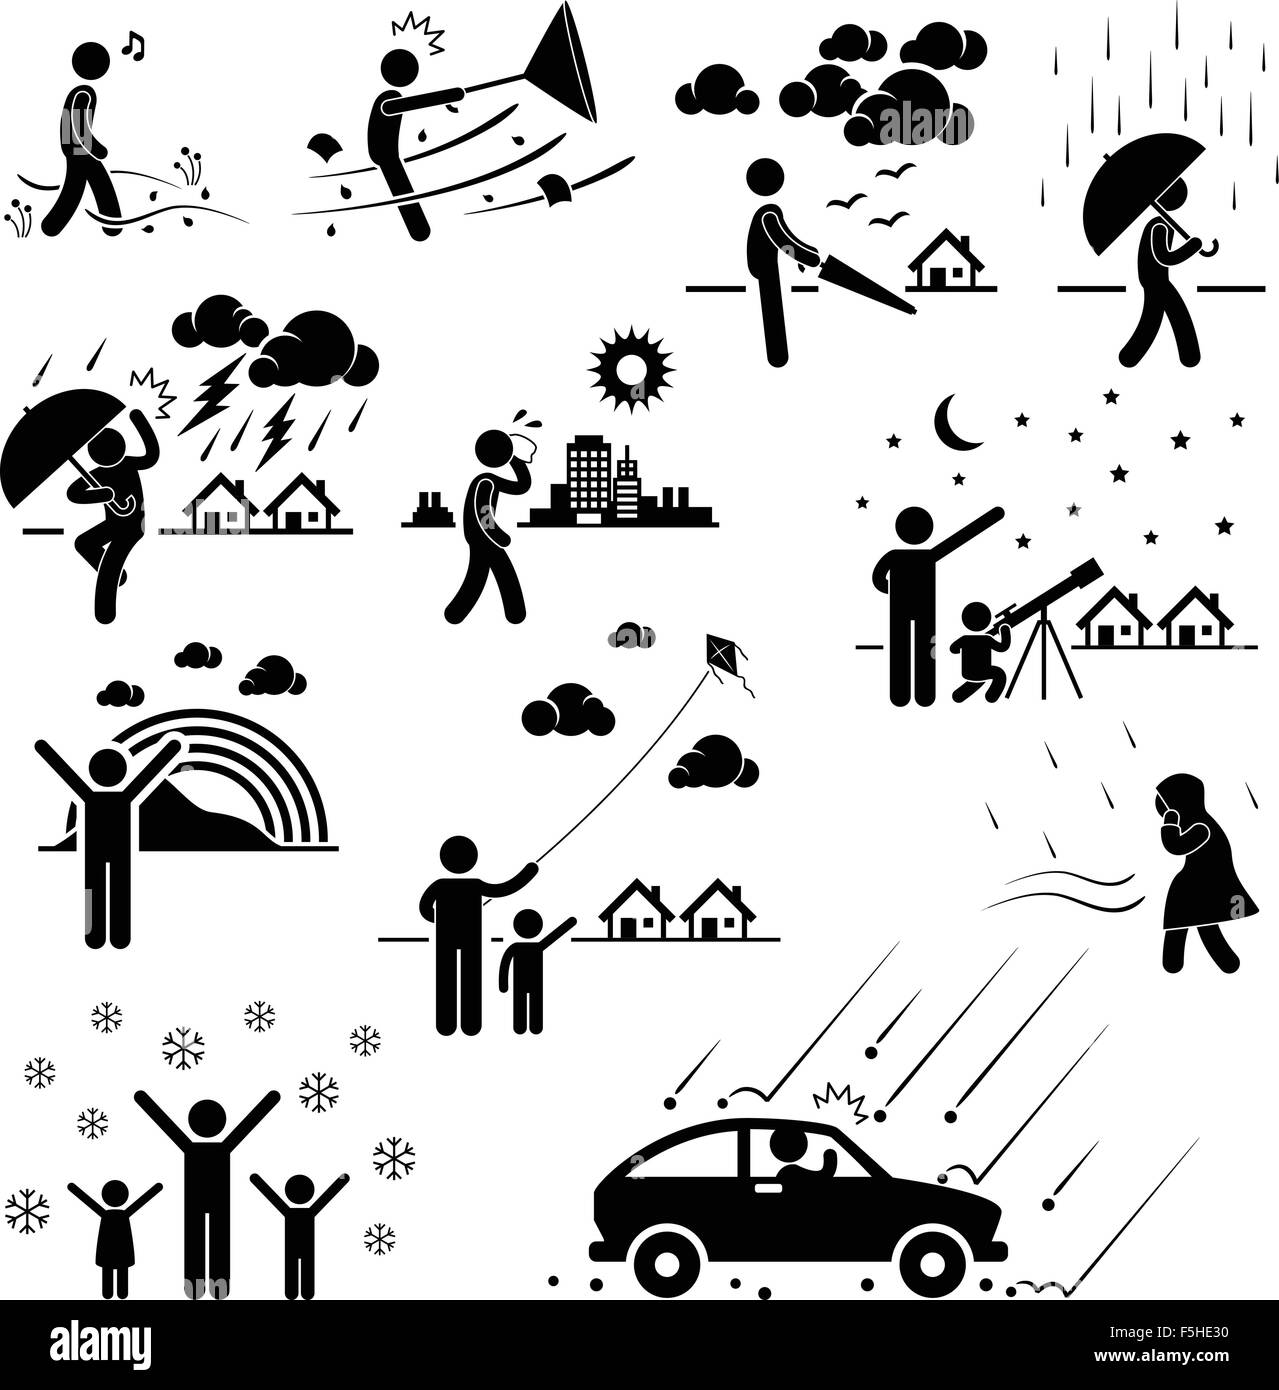 Weather Climate Atmosphere Environment Meteorology Season Man Stick Figure Pictogram Icon Stock Vector